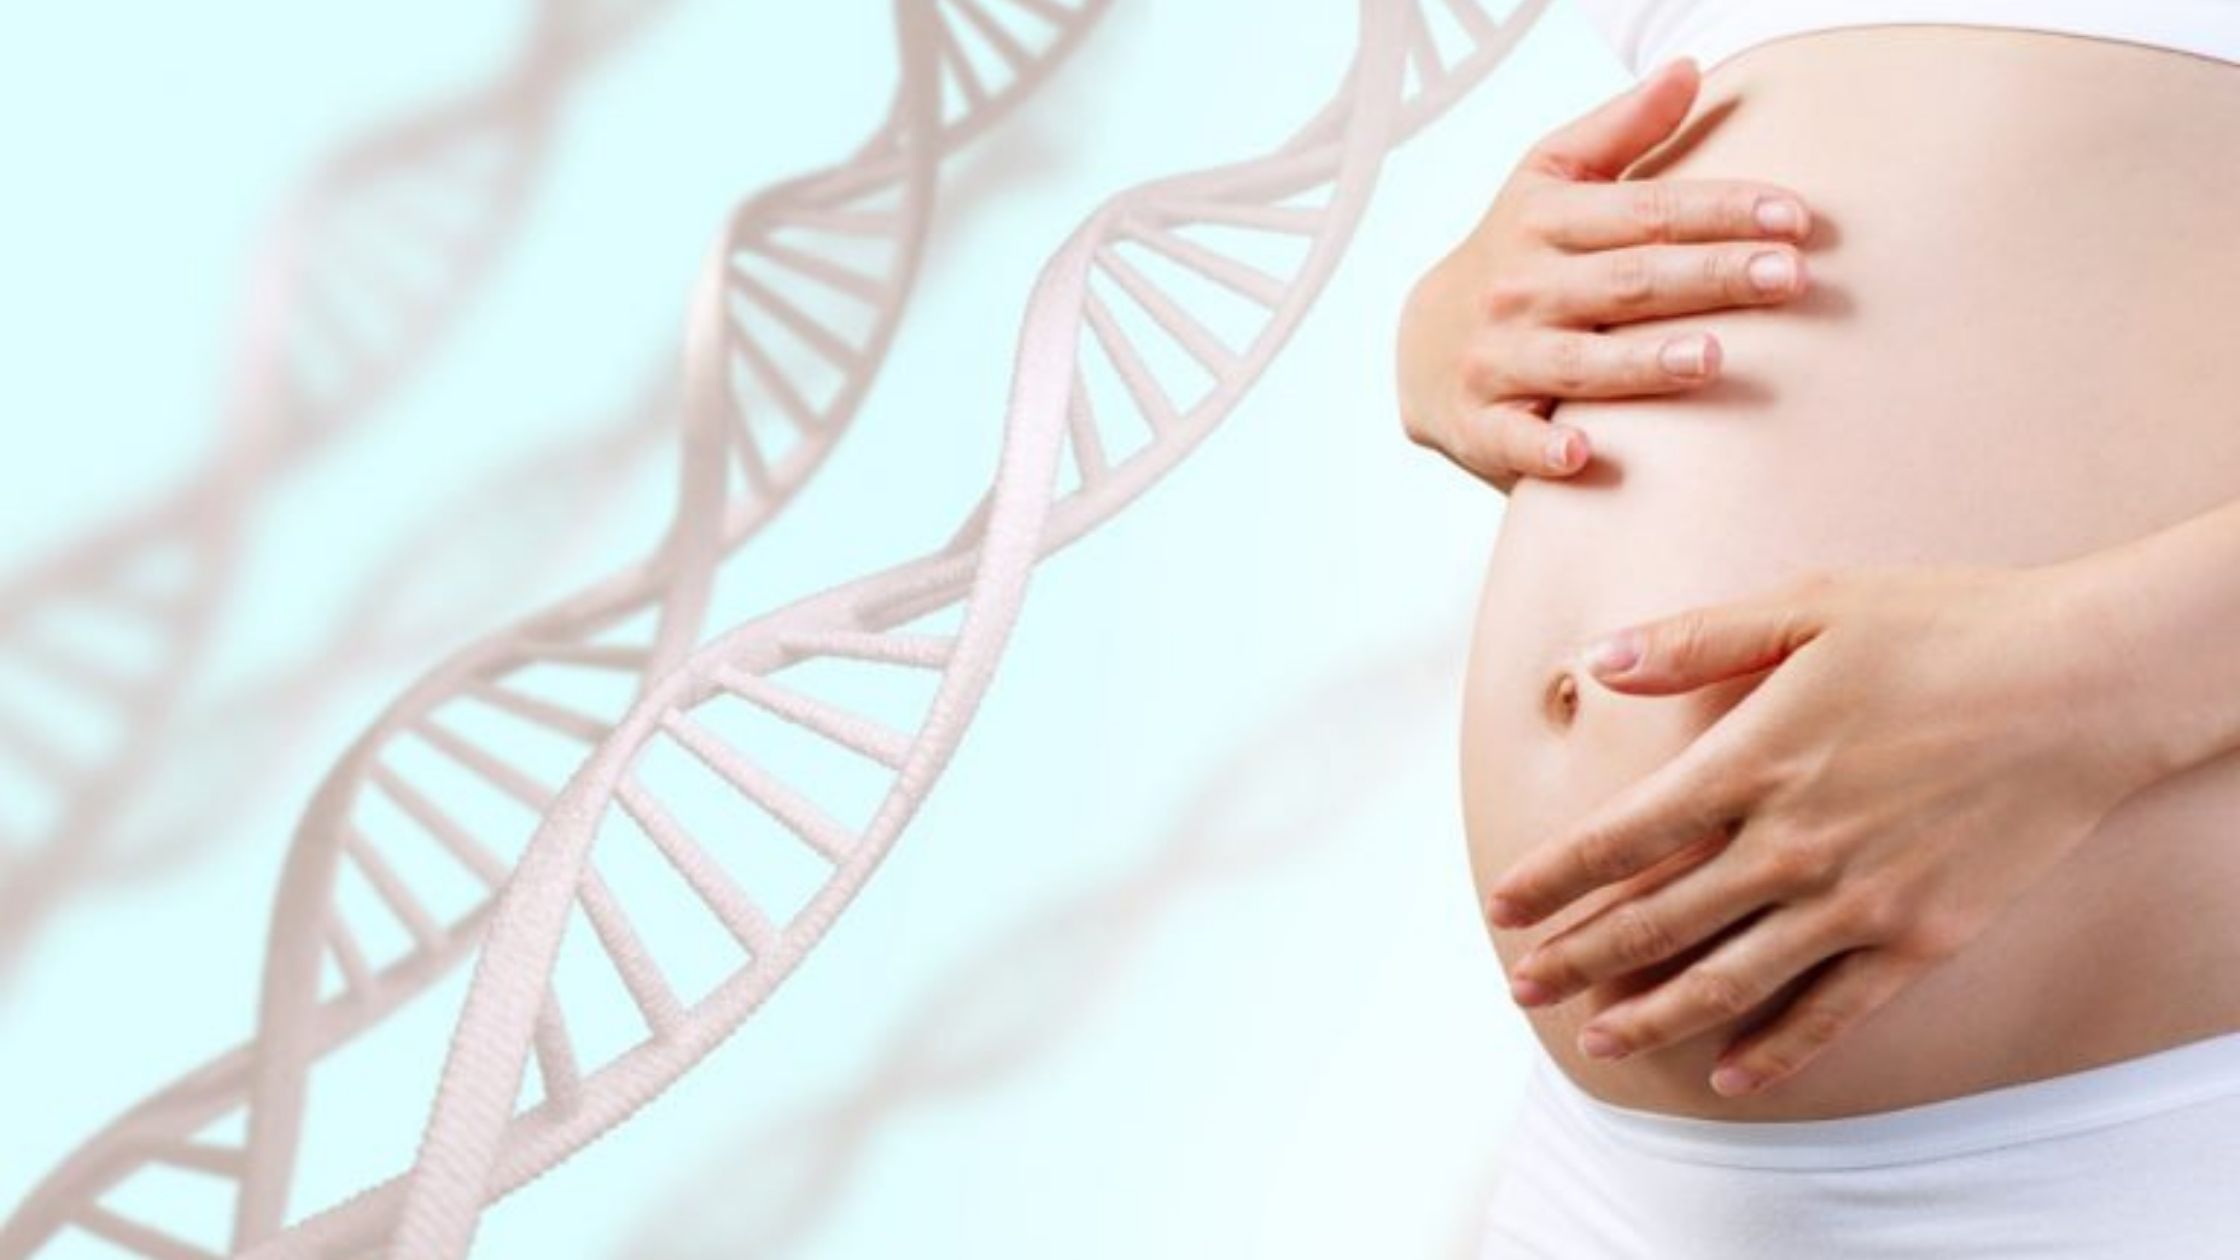 prenatal paternity tests